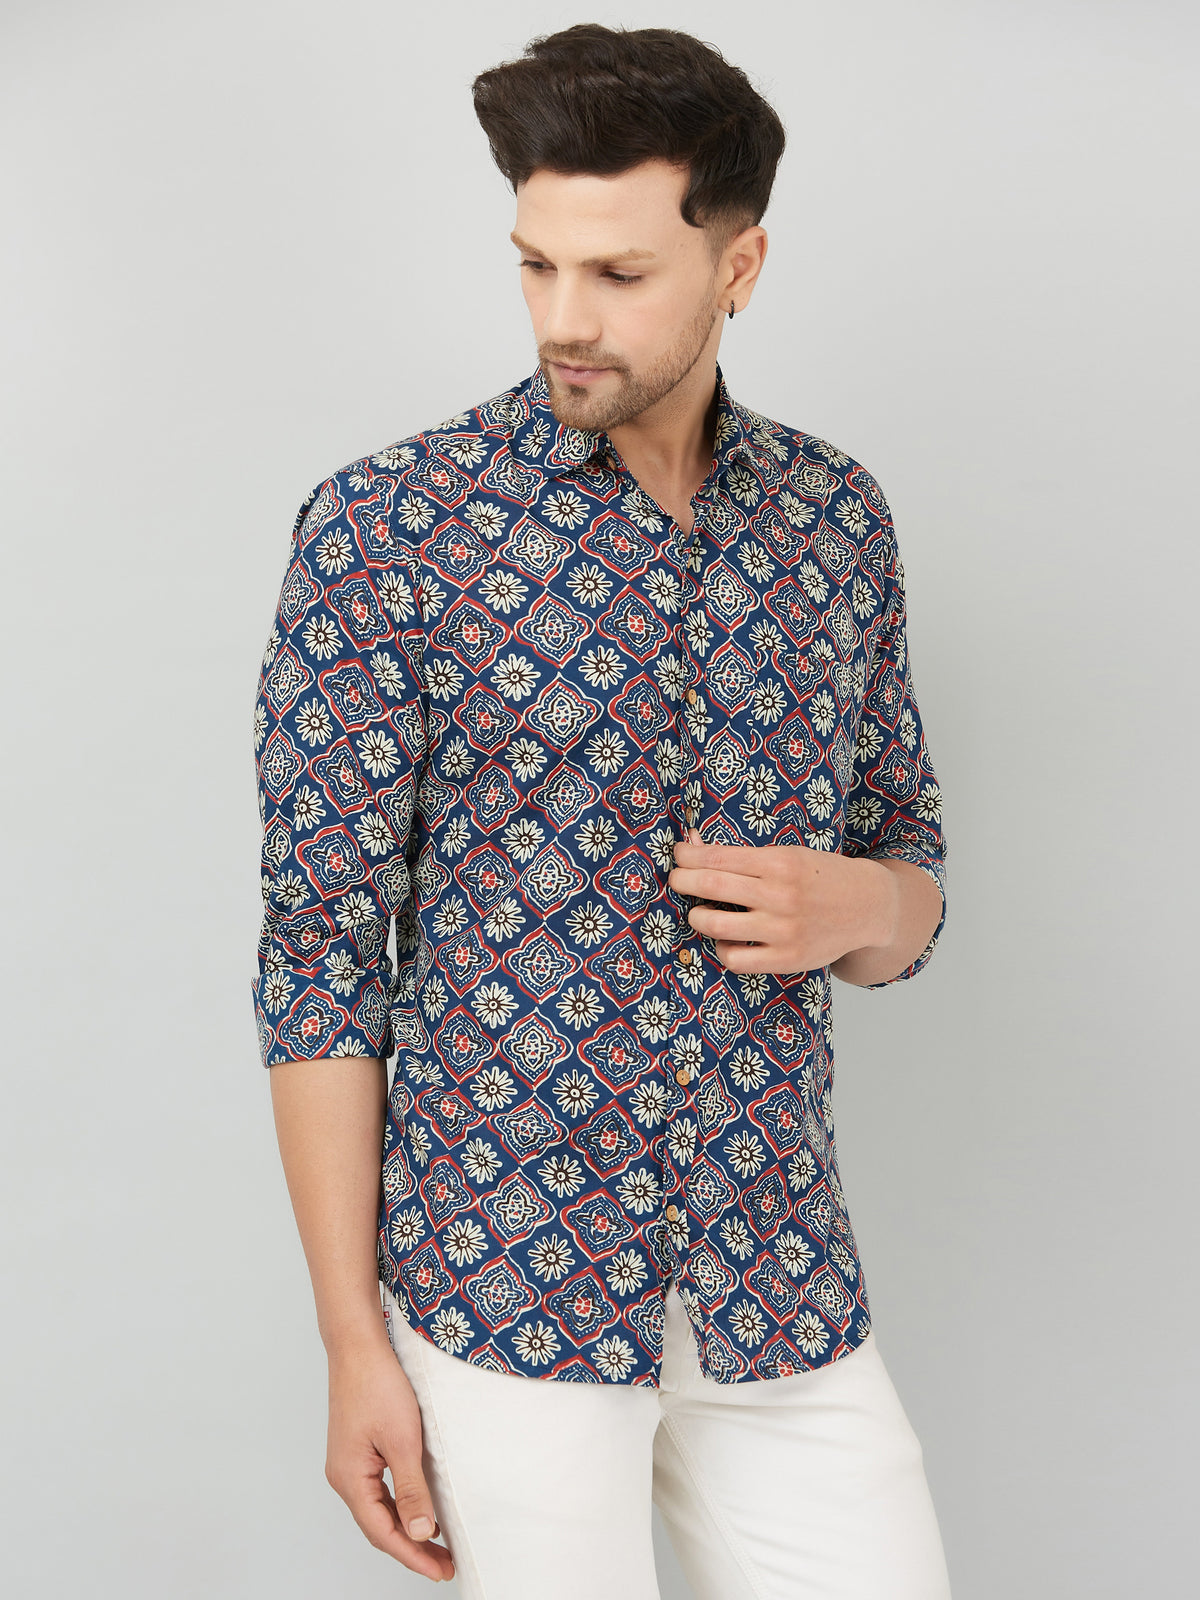 Louis Monarch Premium Navy Blue Jaipuri Printed Cotton Casual Shirt